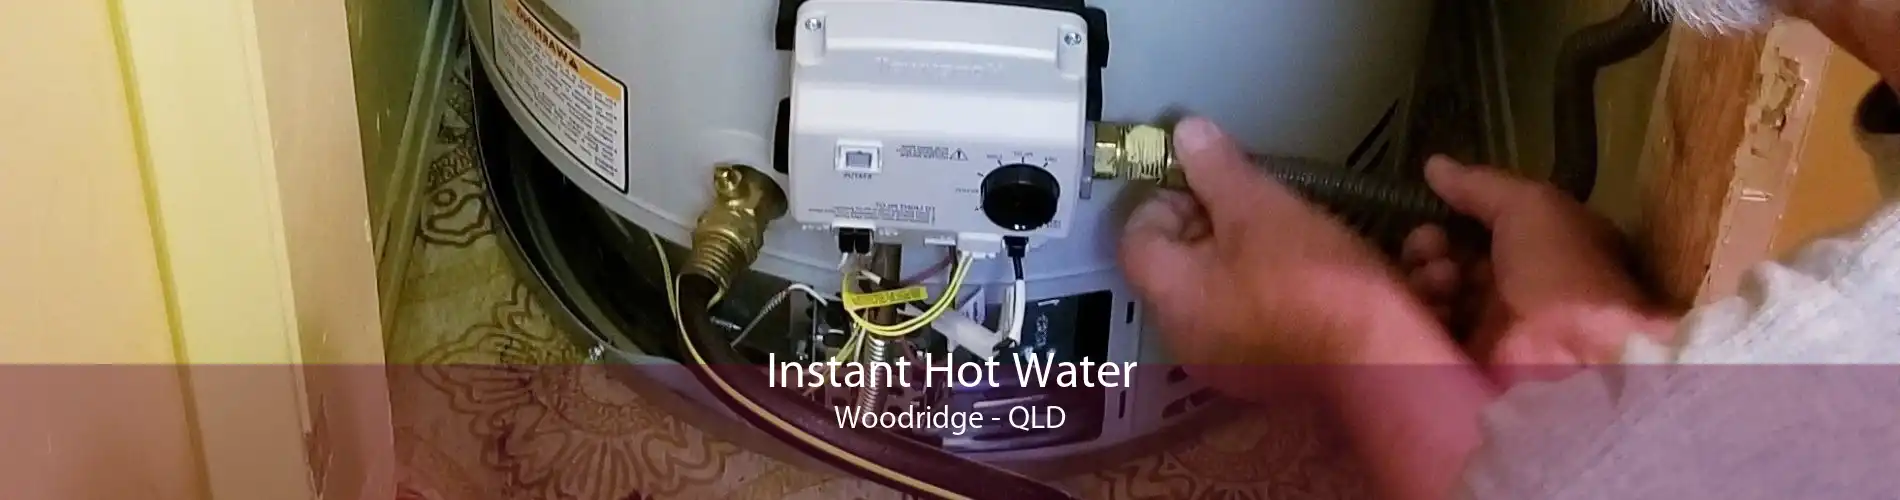 Instant Hot Water Woodridge - QLD